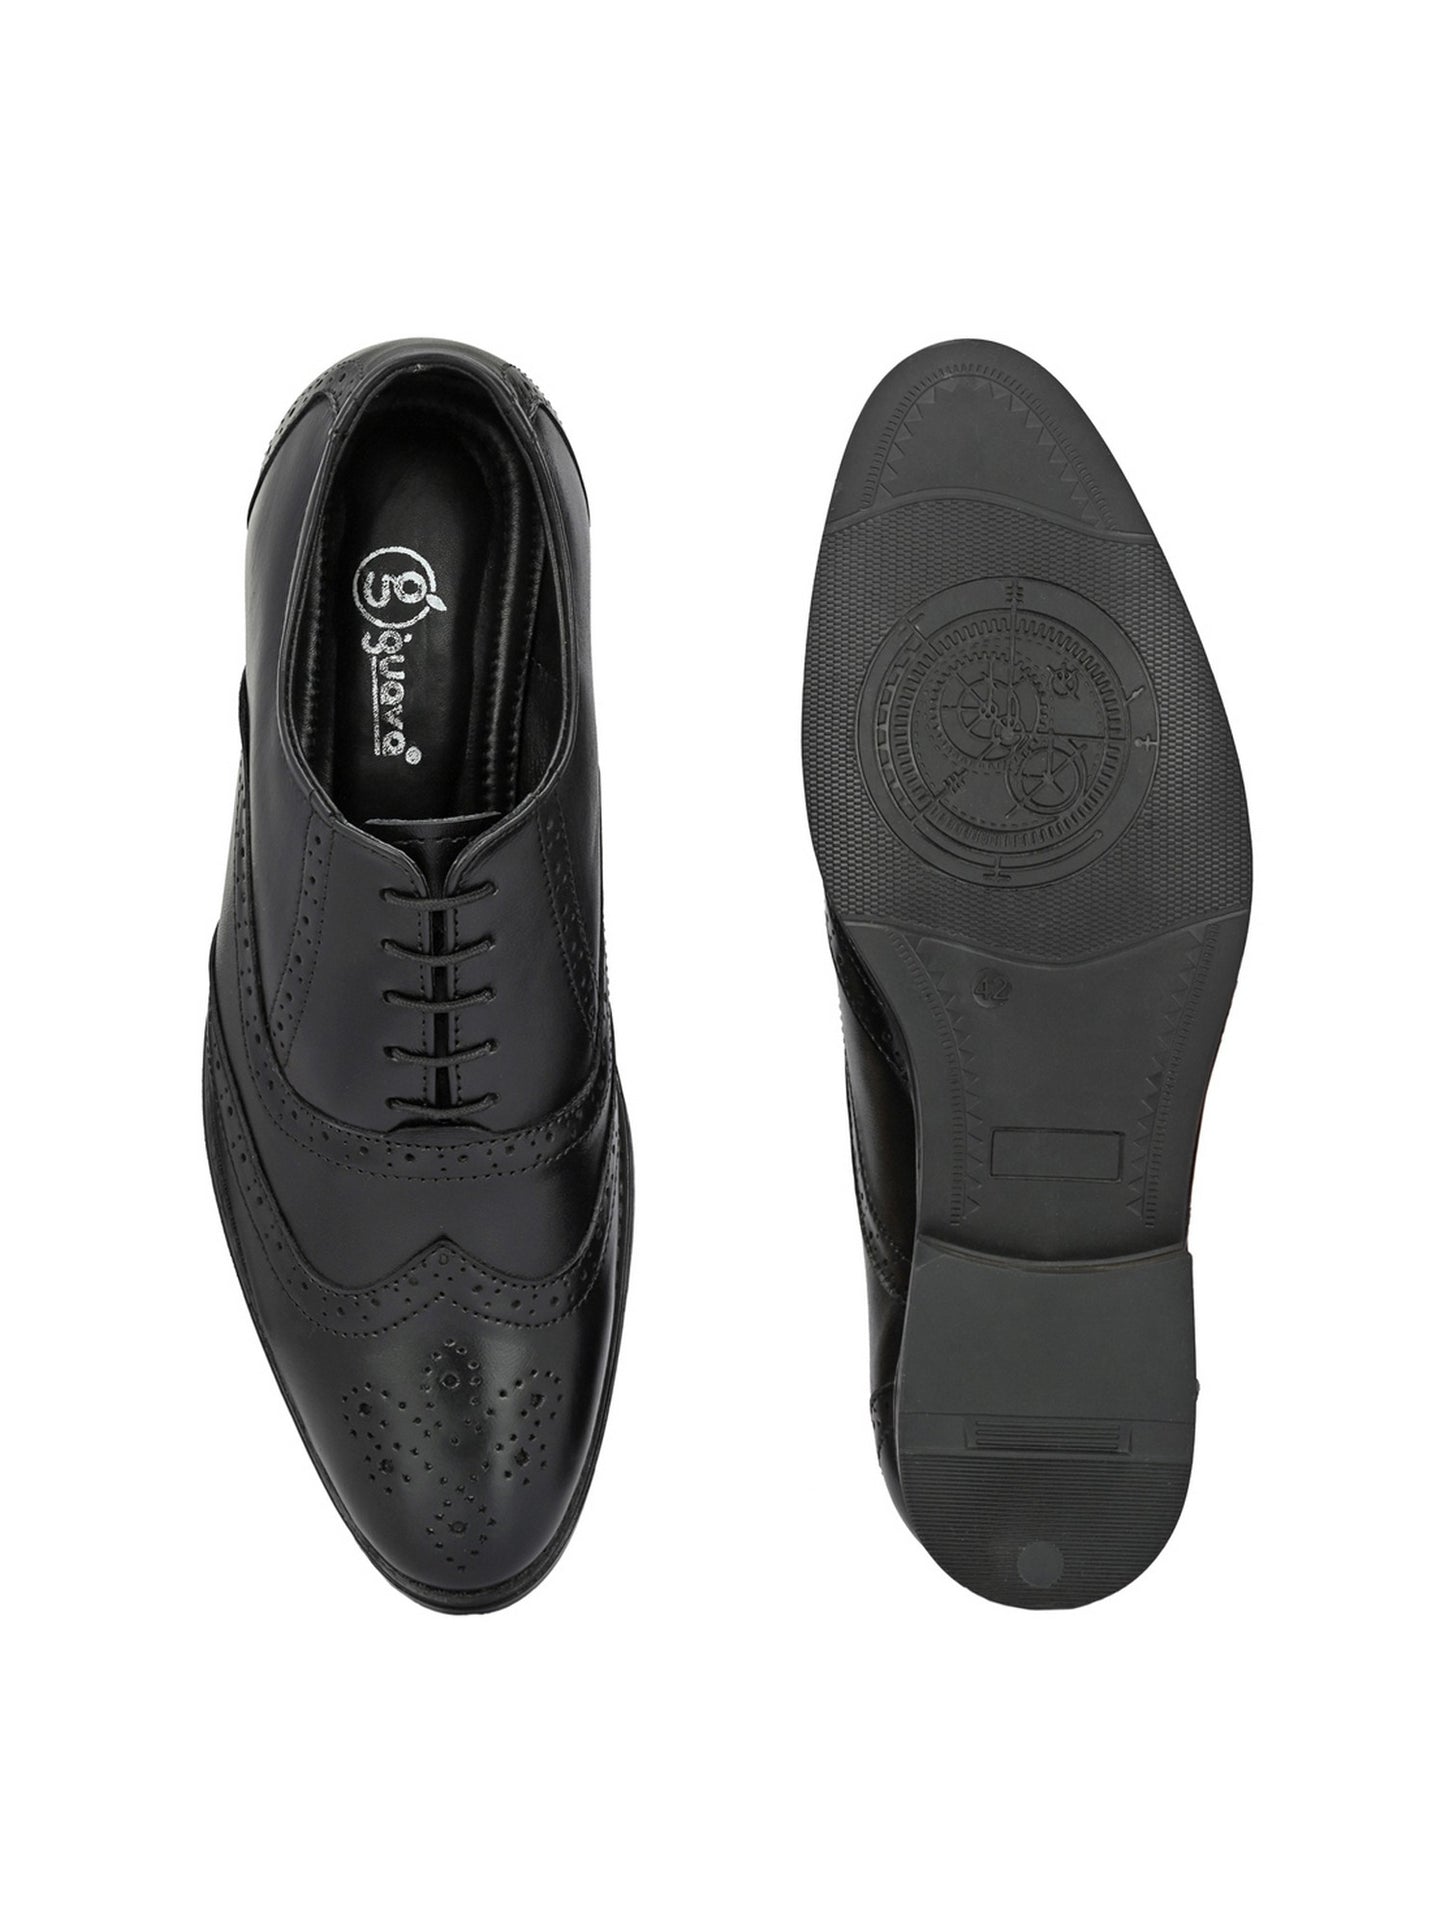 Guava Men's Black Oxford Brouge Lace Up Formal Shoes (GV15JA806)